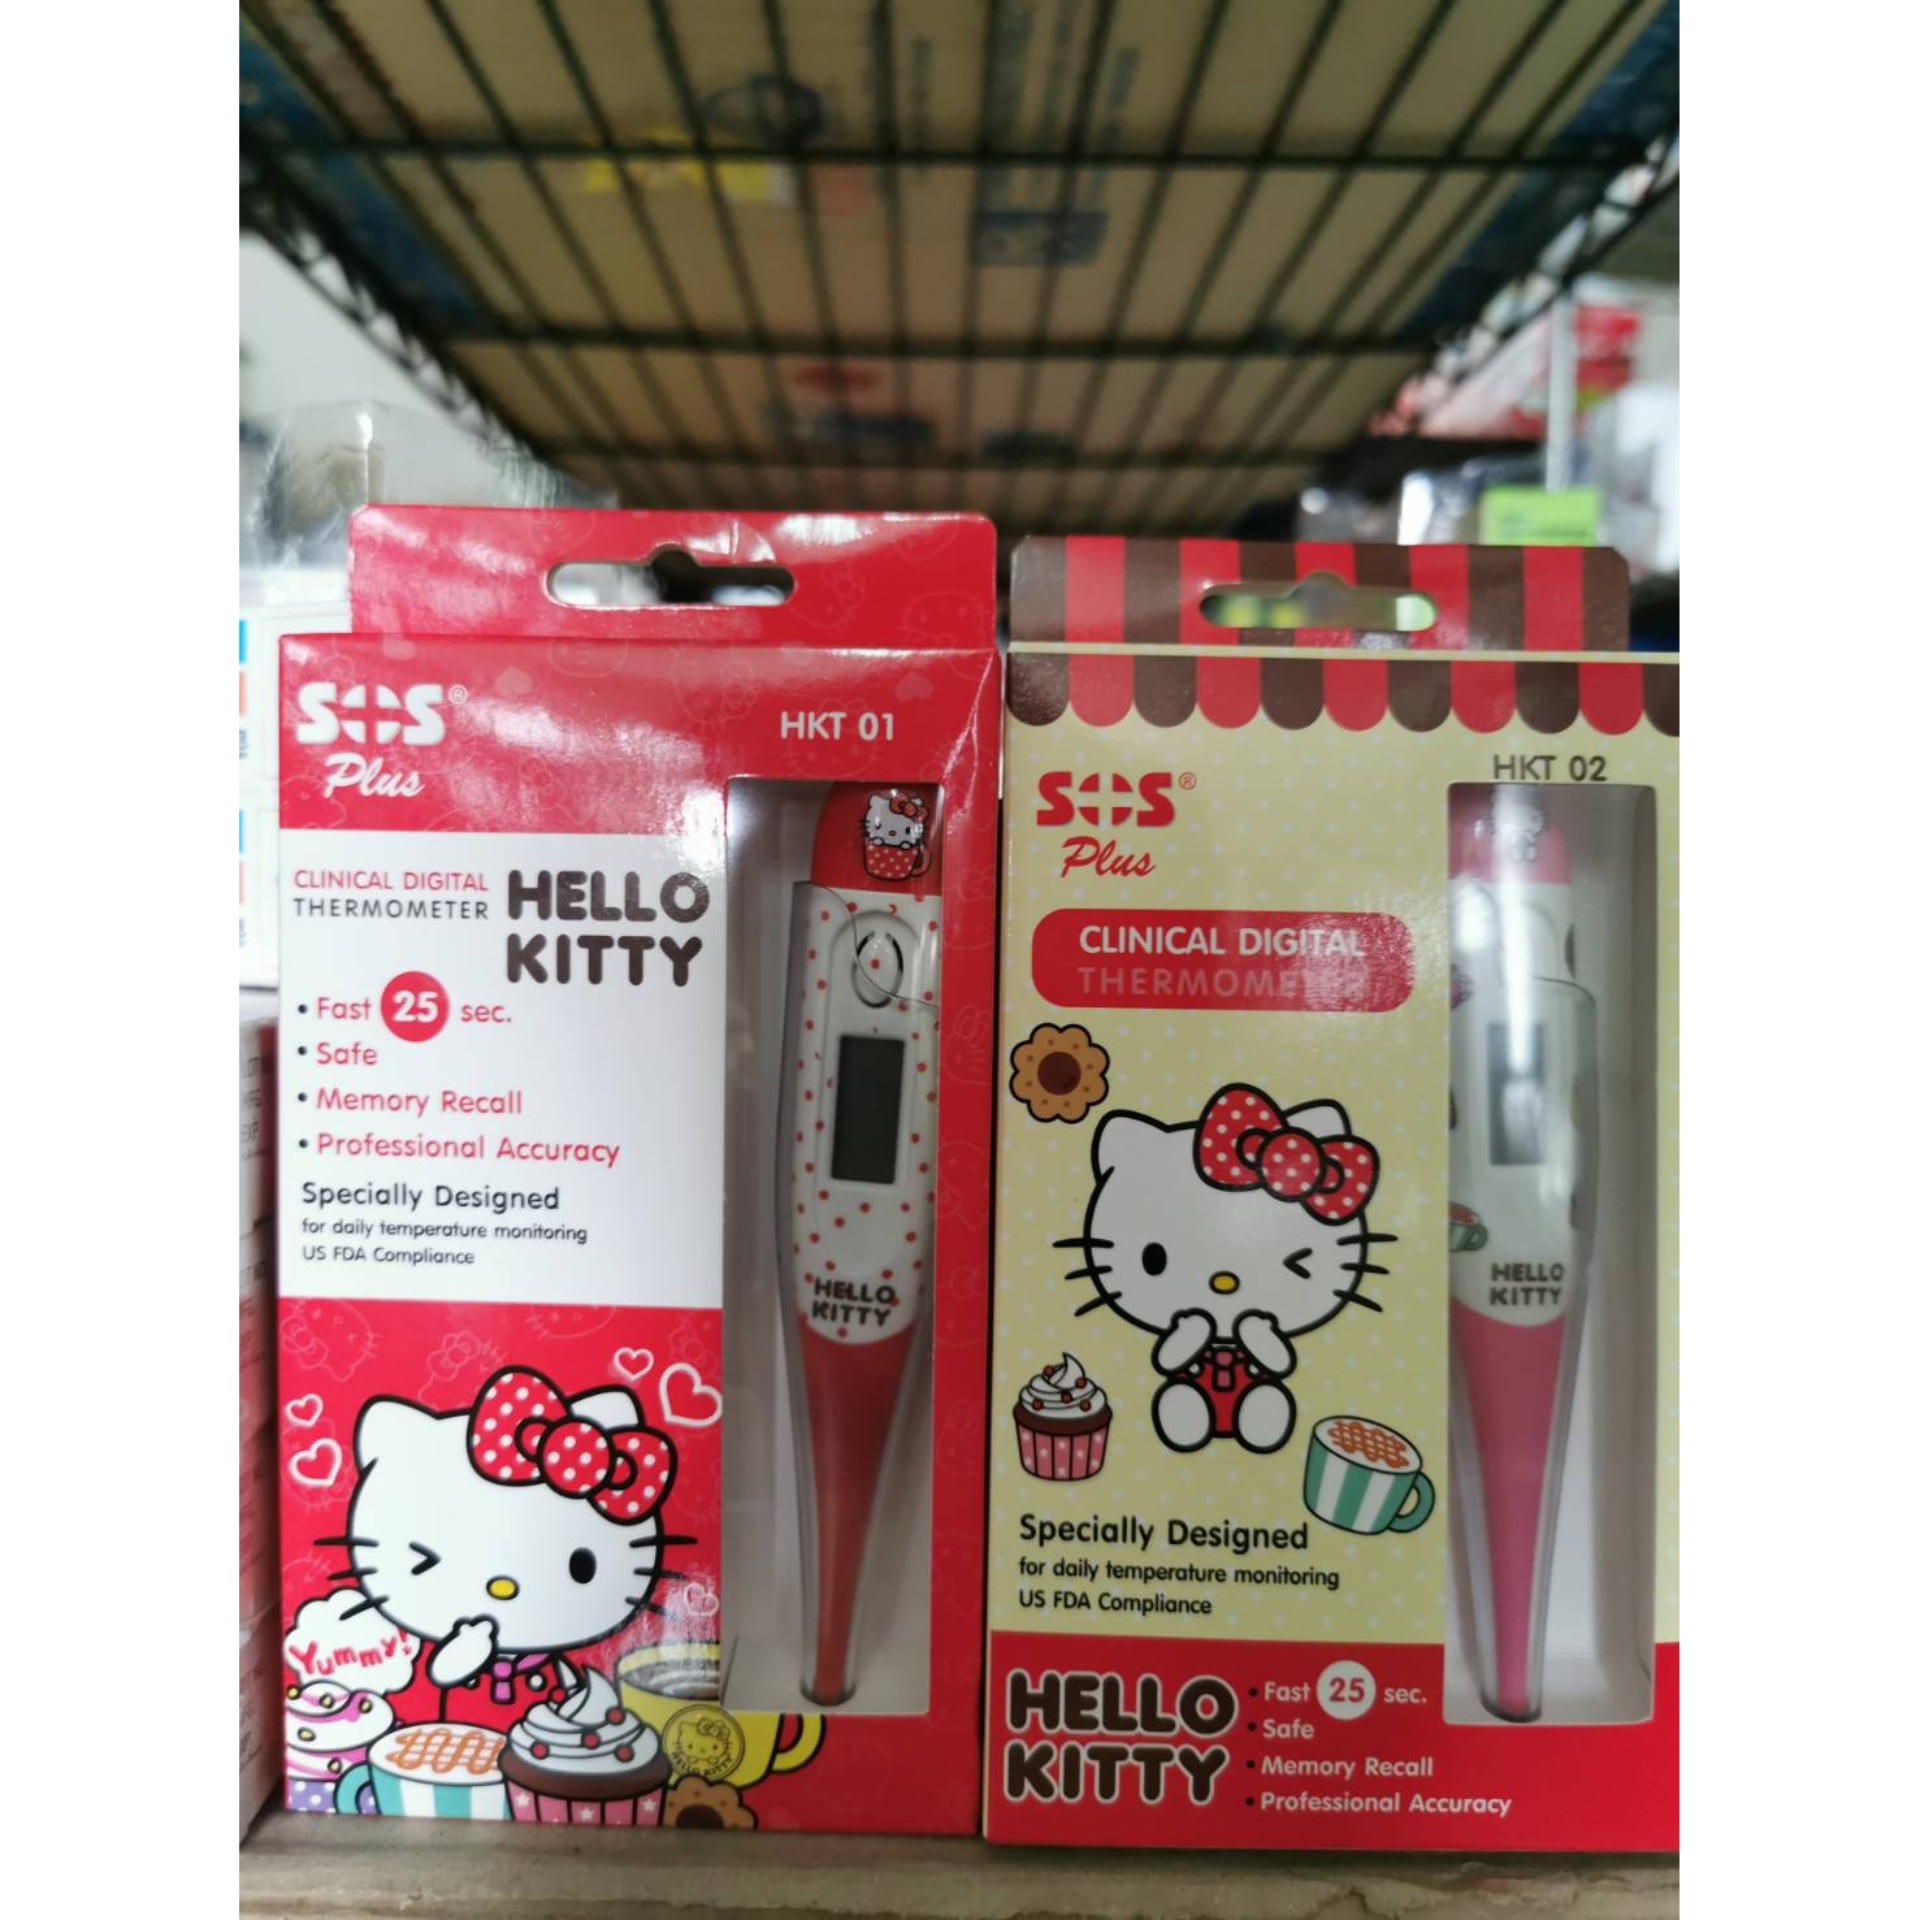 SOS Plus Clinical Digital Thermometer Hello Kittyใช้ง่าย น่ารัก สะดวก แม่นยำ คละลาย